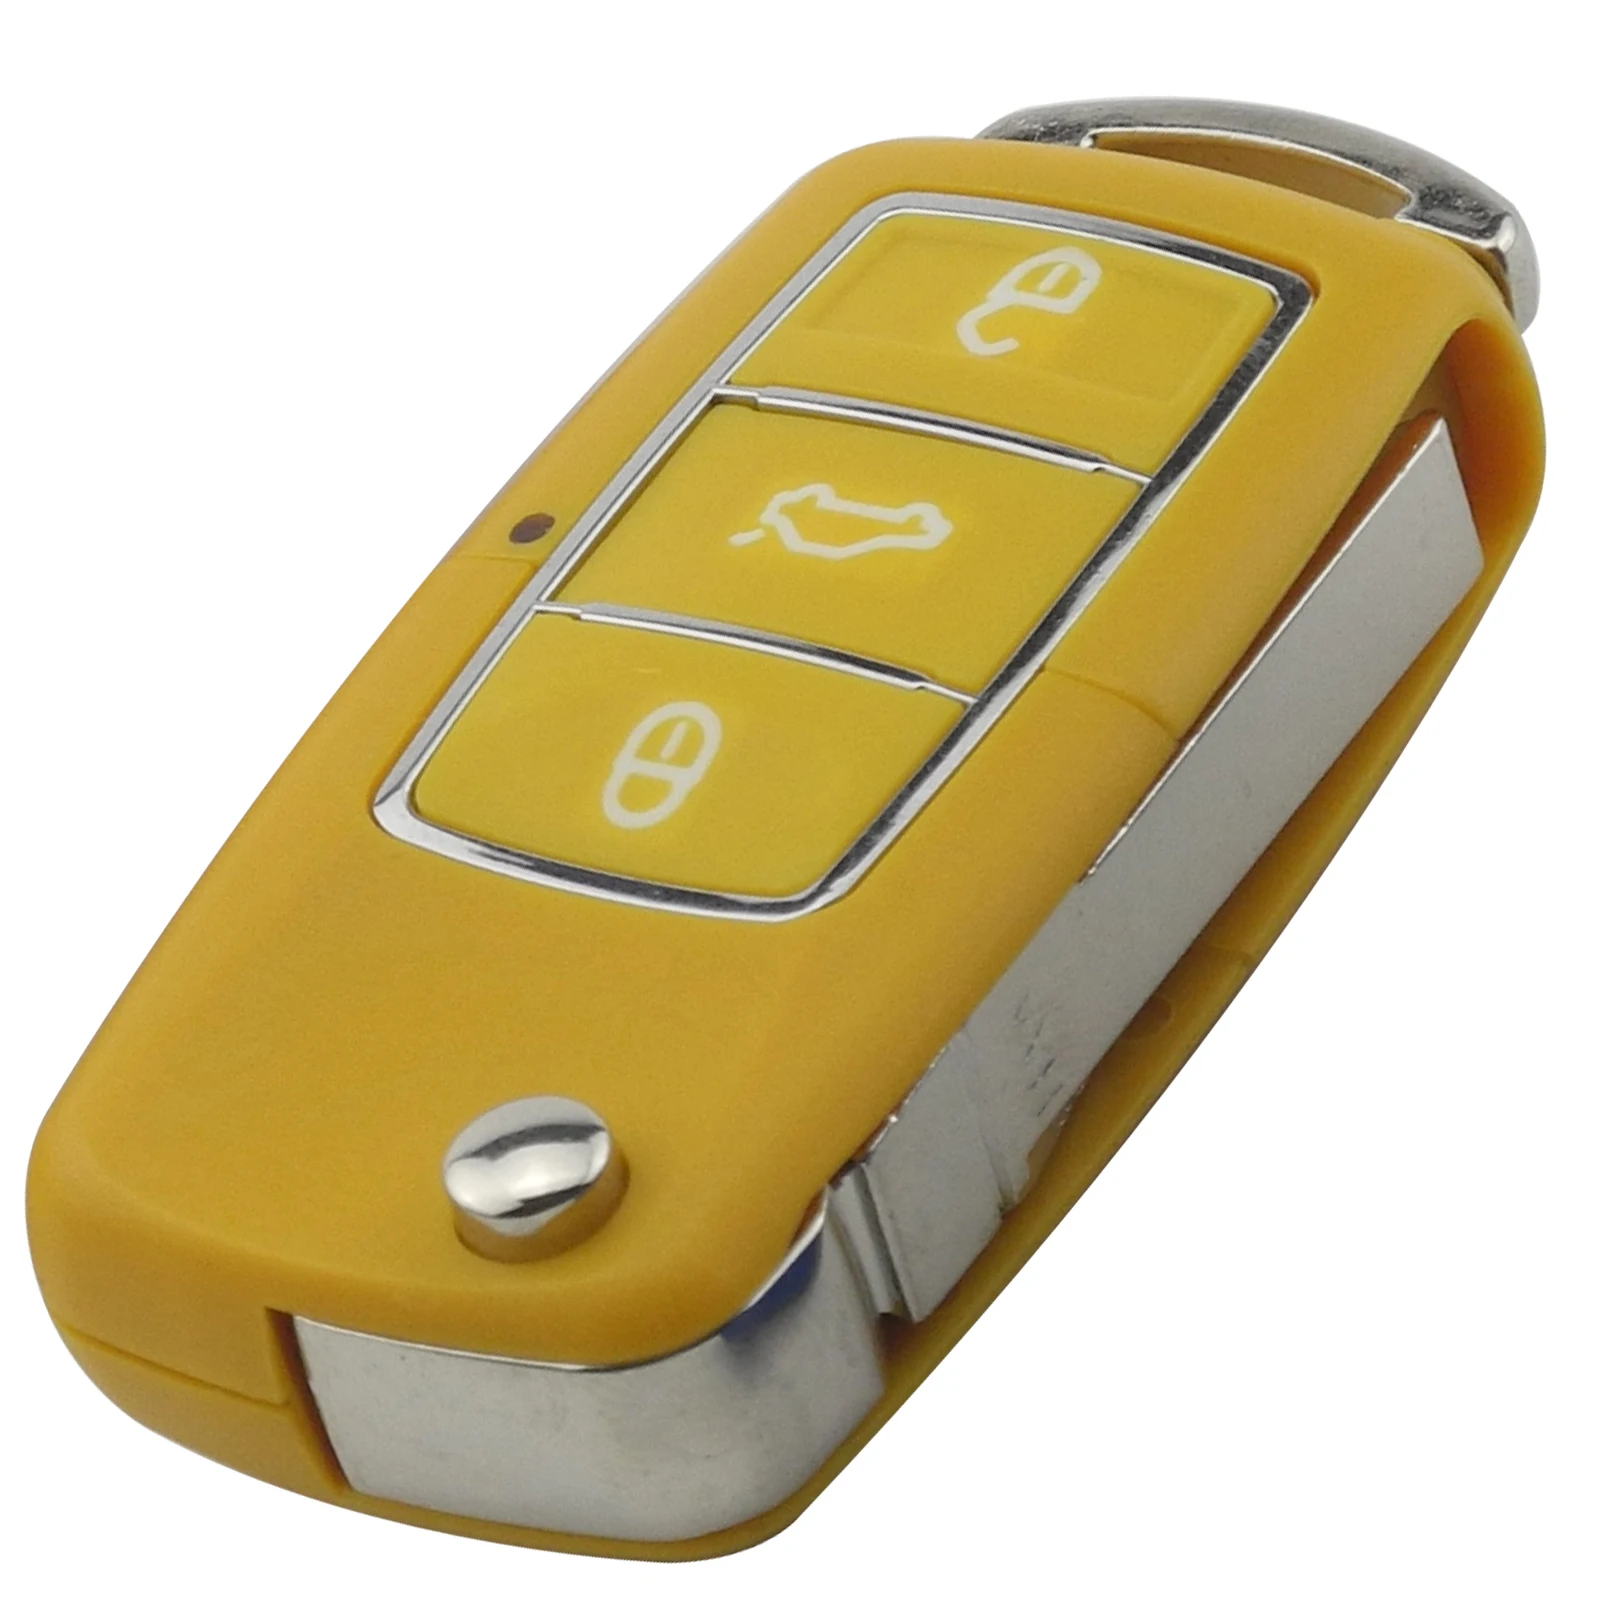 Jingyuqin откидной складной 3 кнопки дистанционного ключа автомобиля оболочки брелок чехол для Volkswagen VW Jetta Golf Passat Beetle Polo Bora - Цвет: Цвет: желтый